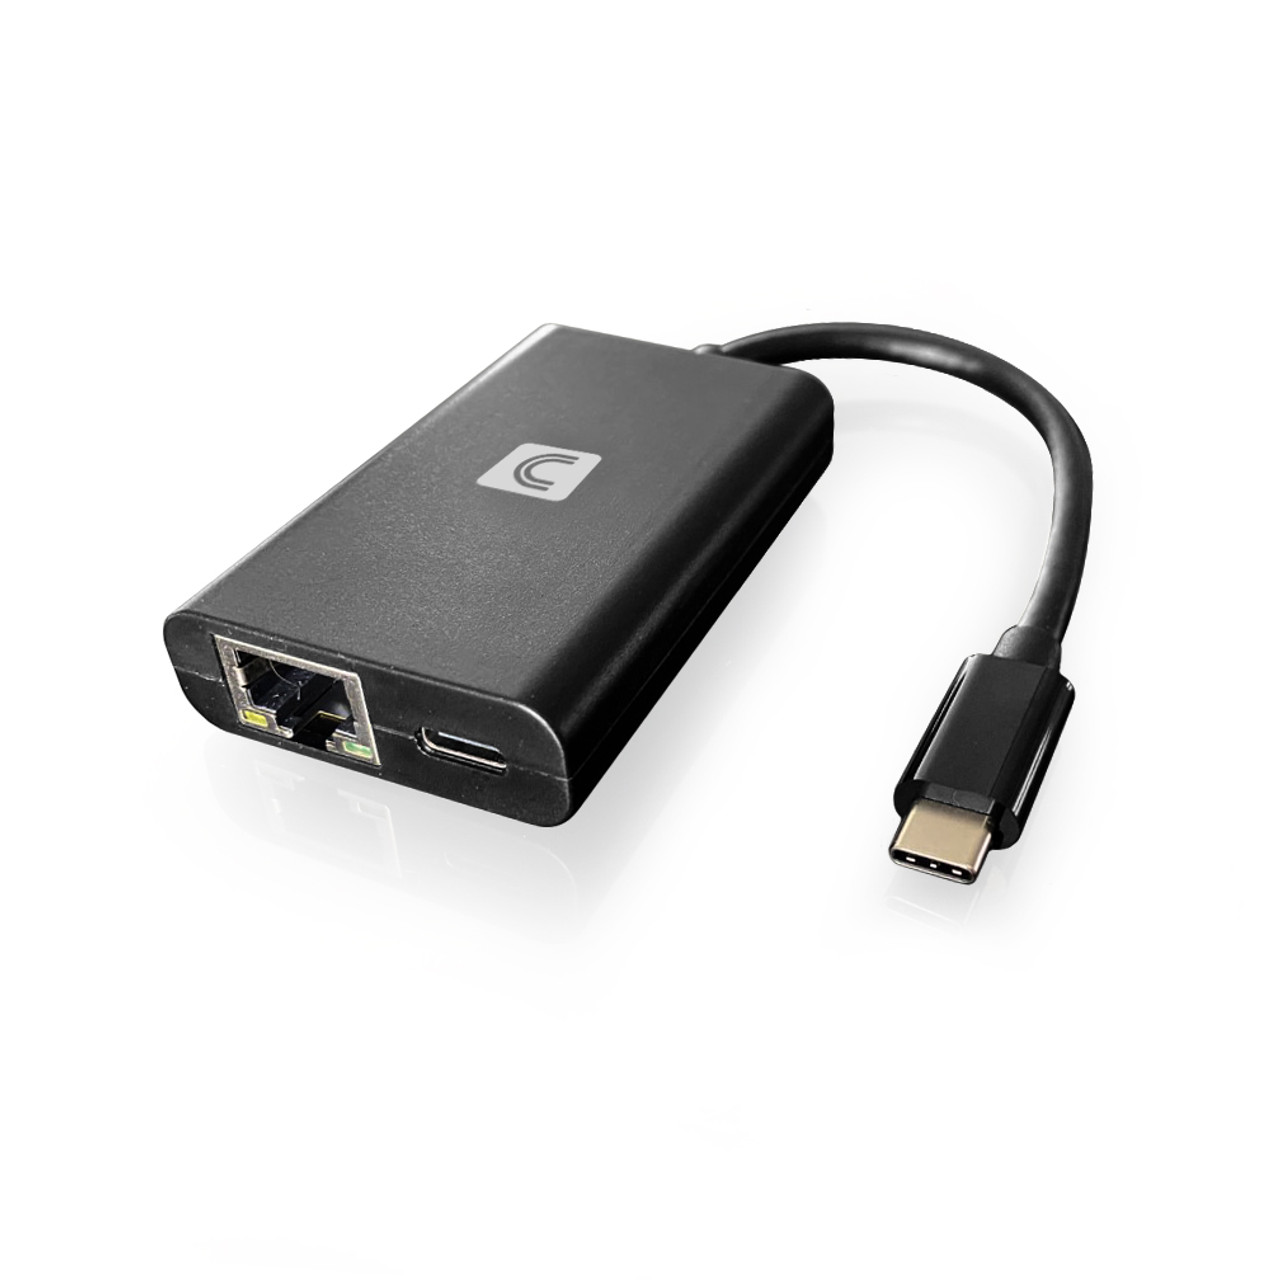 USB-C® To DVI-D Video Adapter Converter - Black, USB-C Adapter Converters, USB-C Cables, Adapters, and Hubs